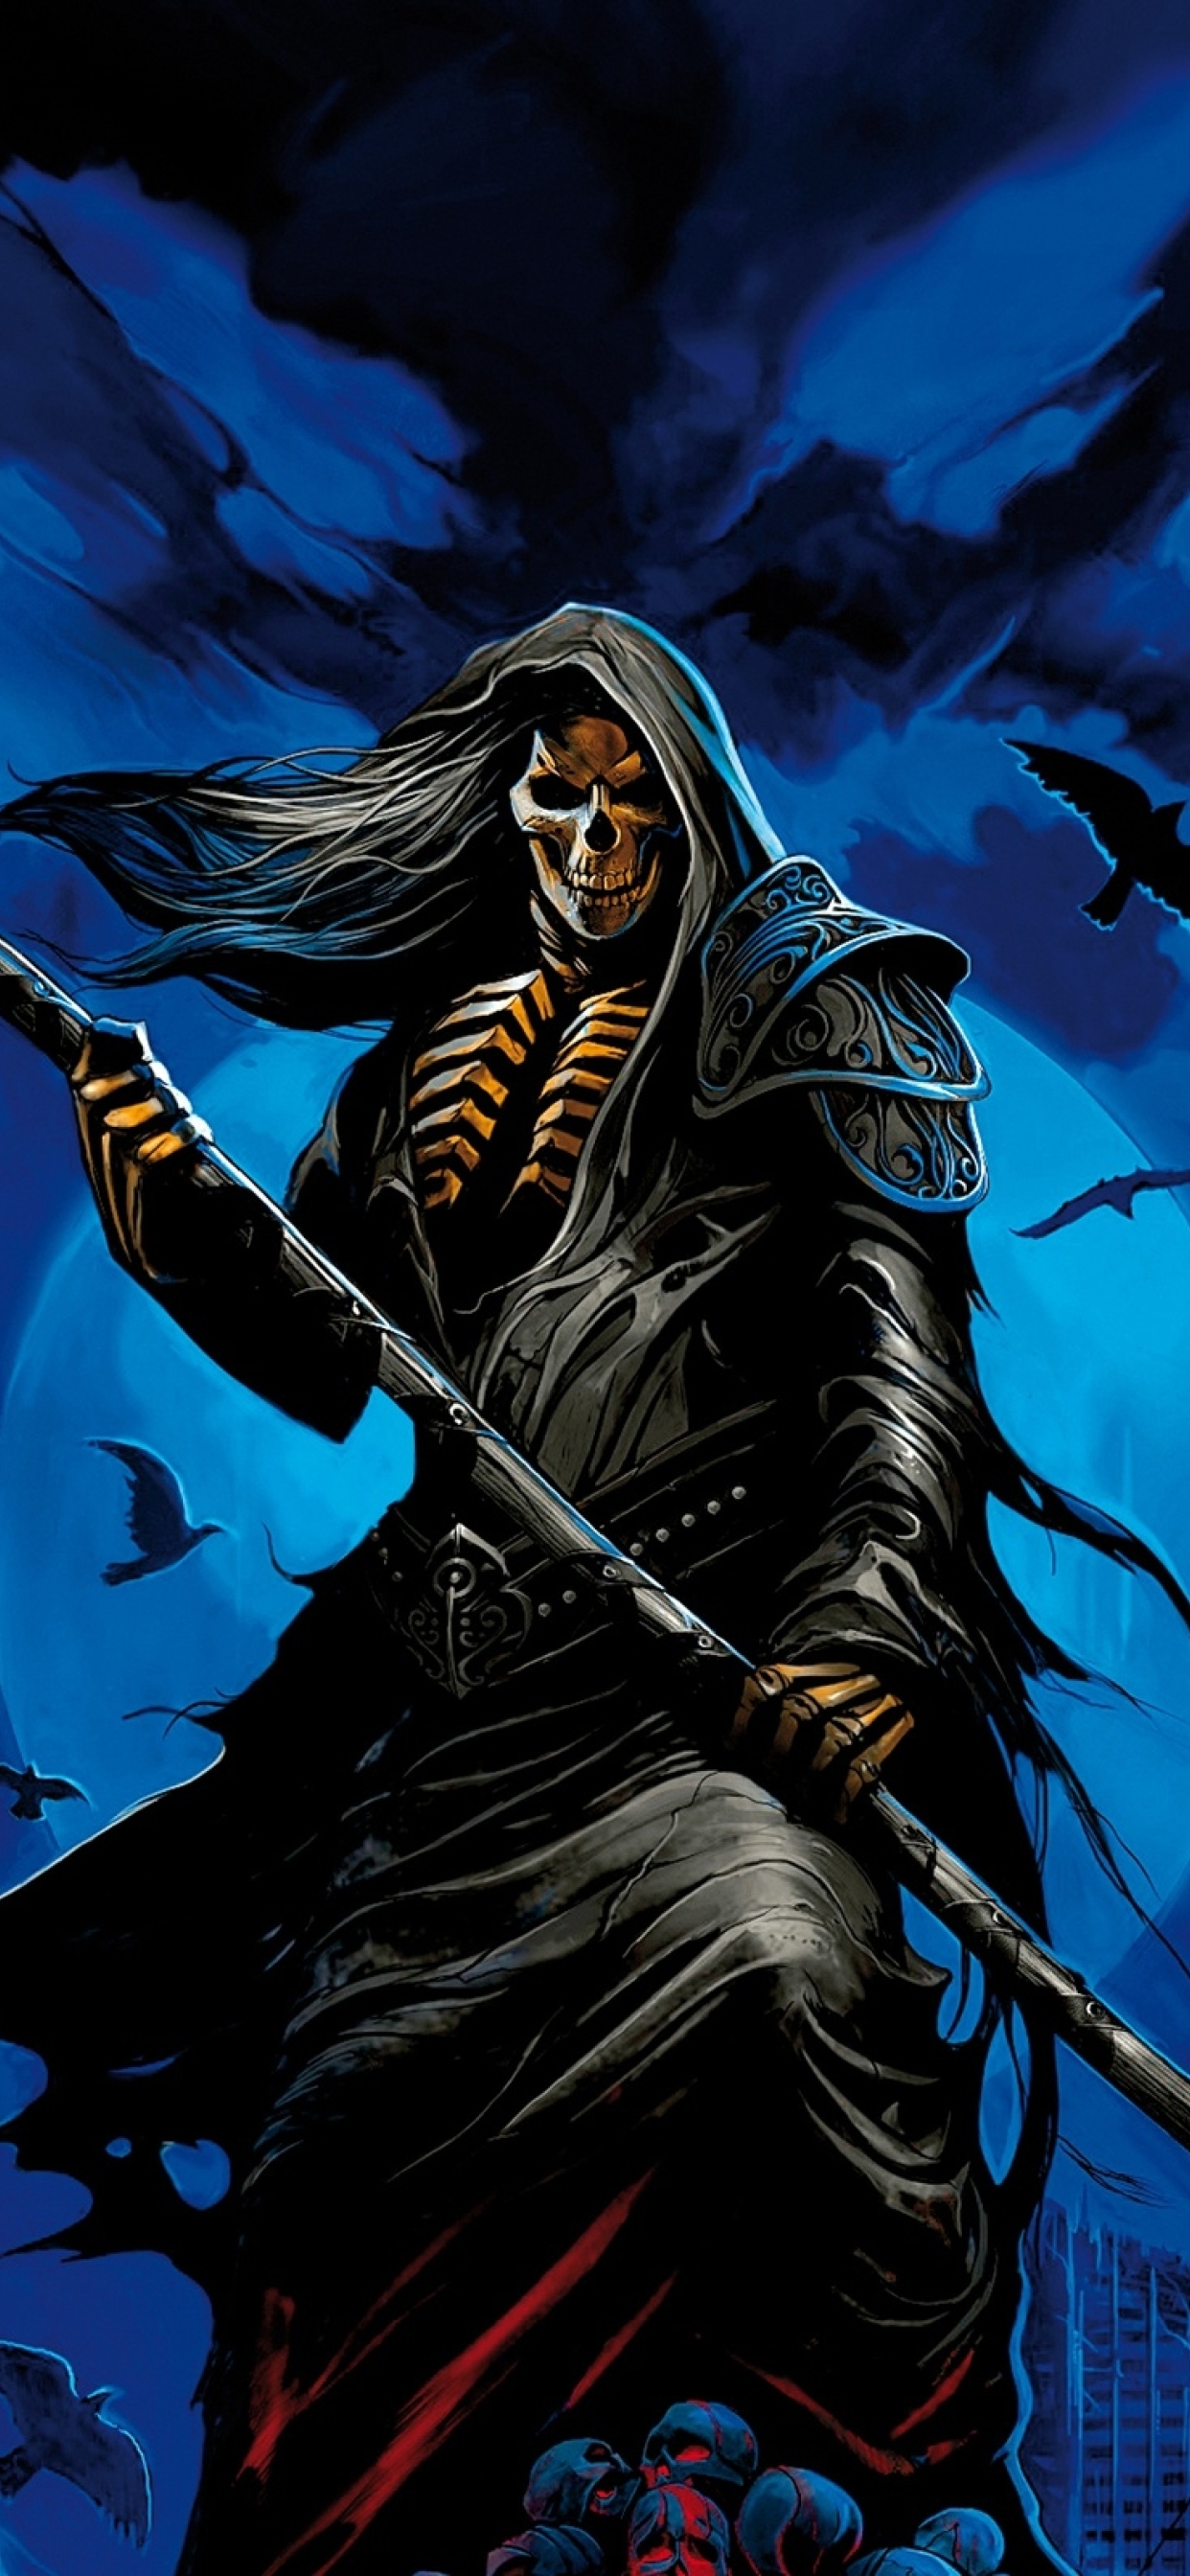 Mobile wallpaper Dark Robot Grim Reaper Scythe 1328188 download the  picture for free